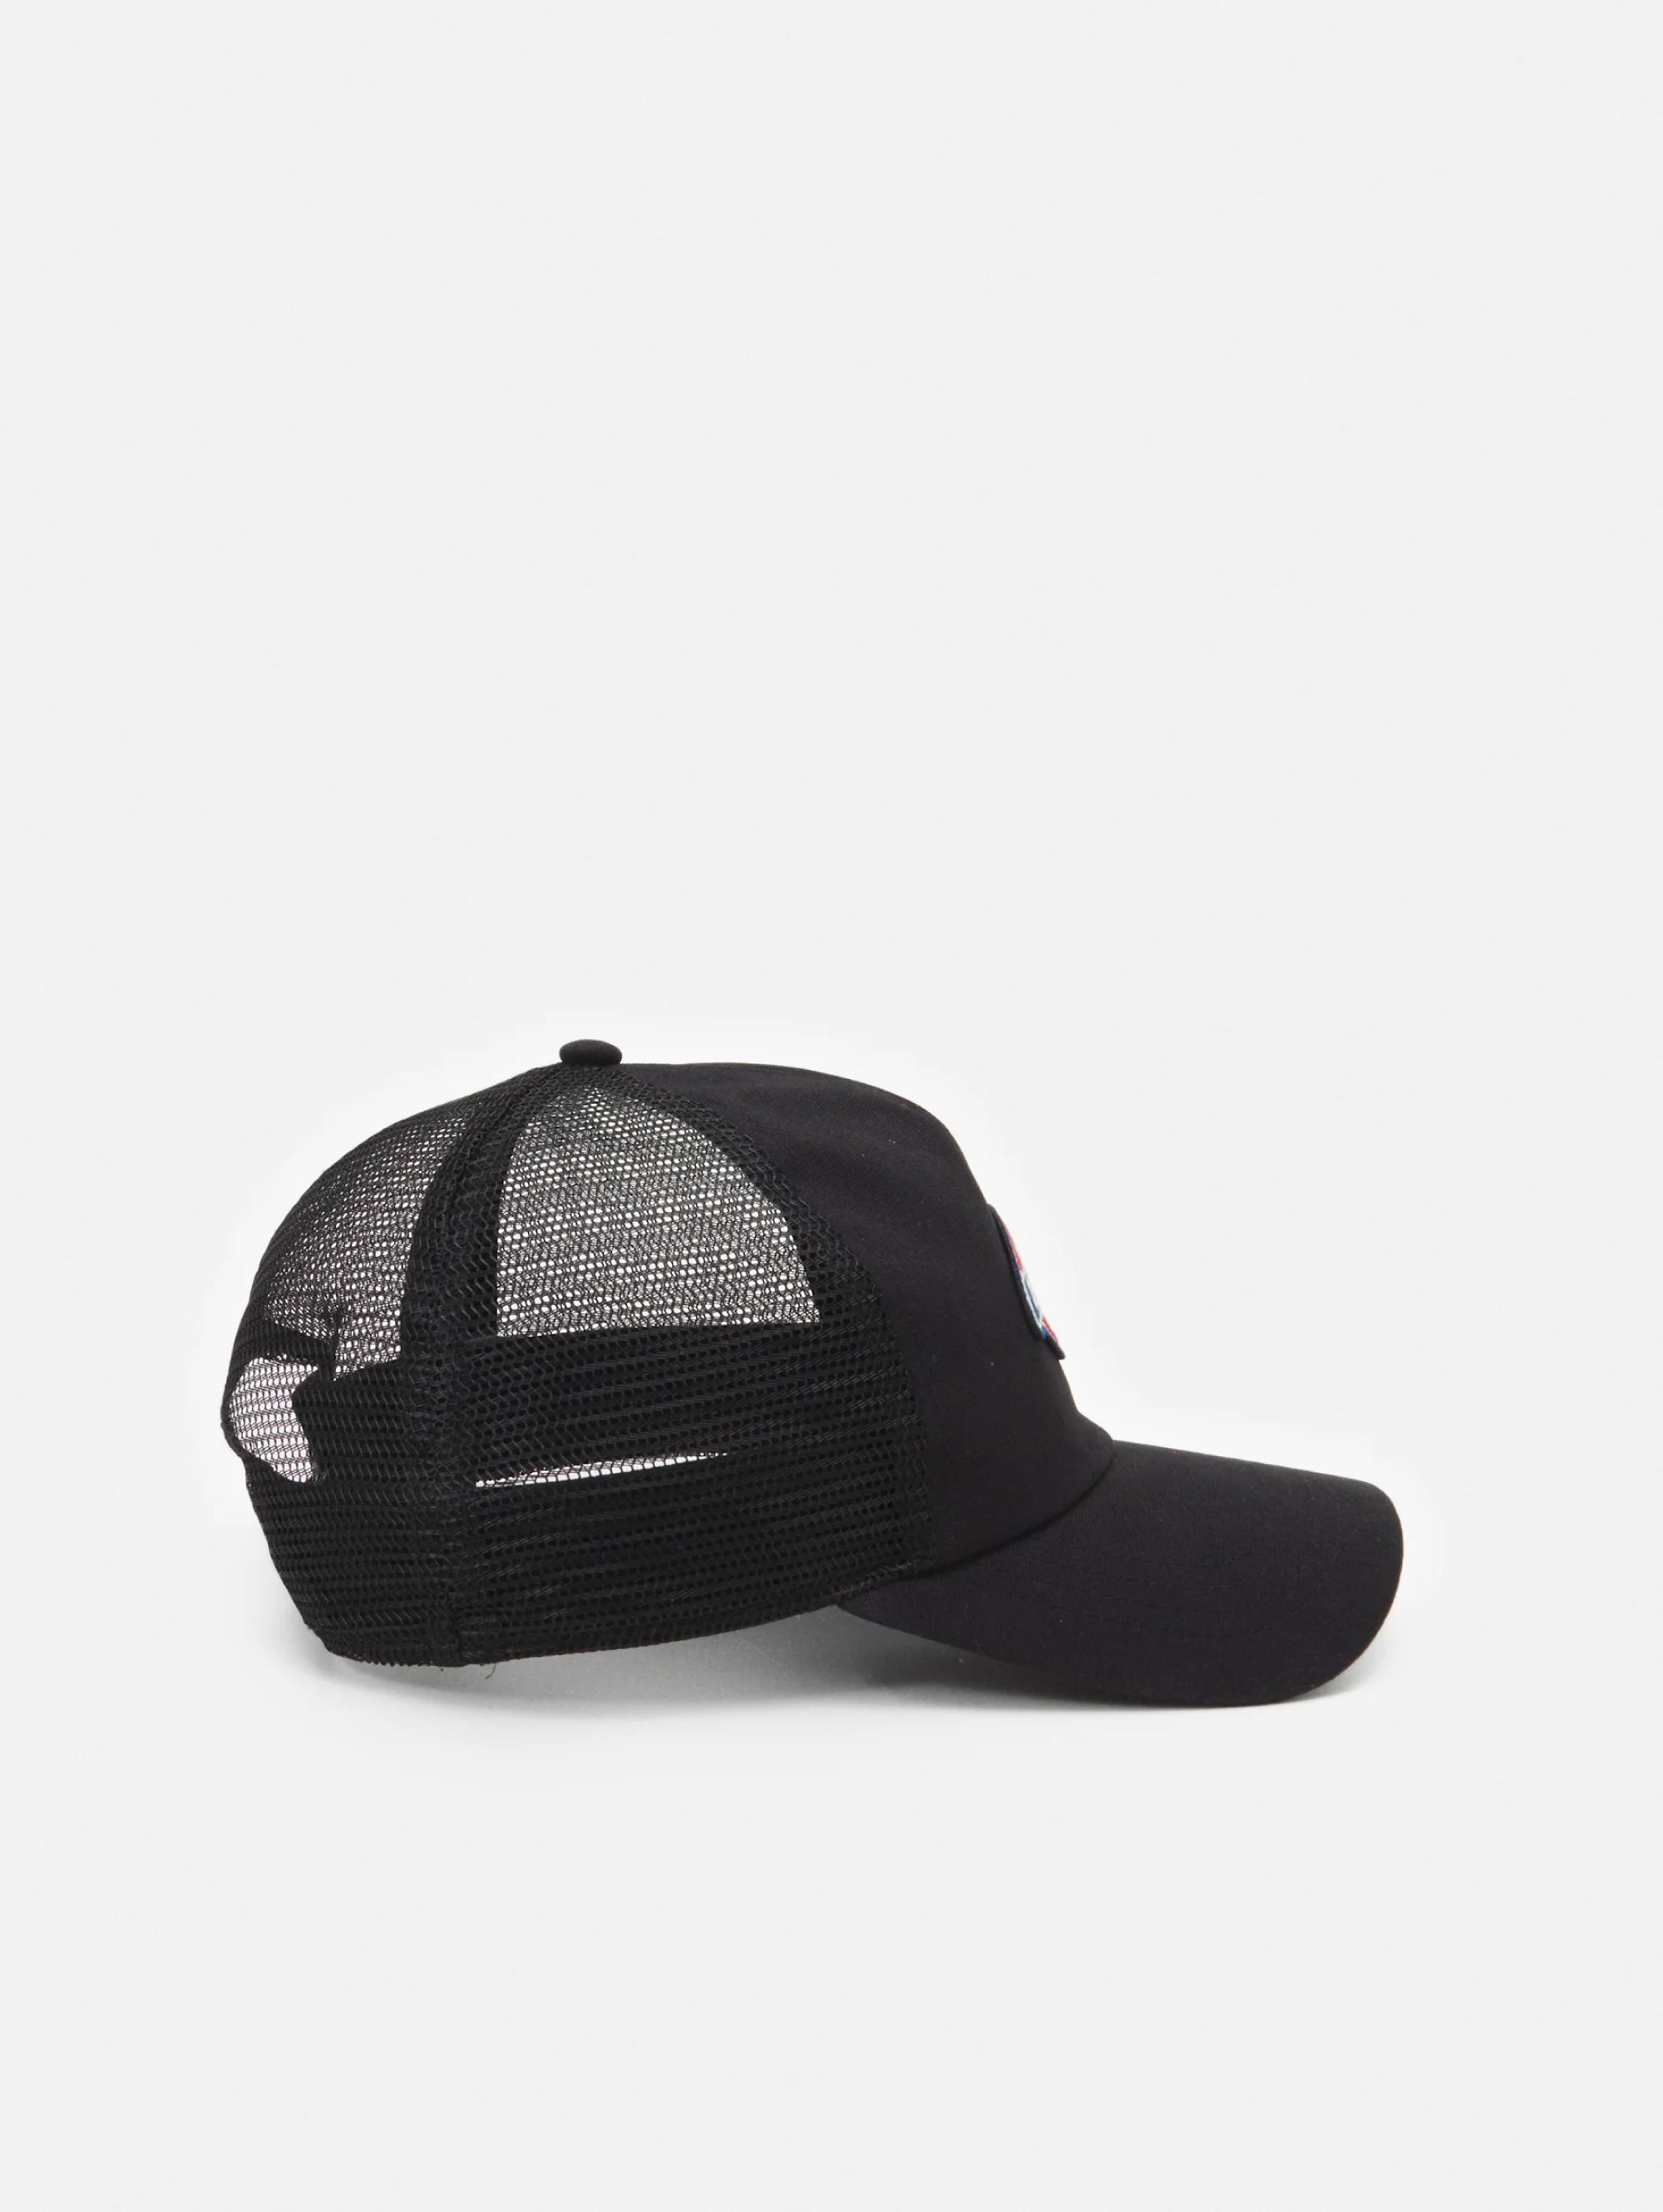 Black Mesh and Cotton Trucker Hat